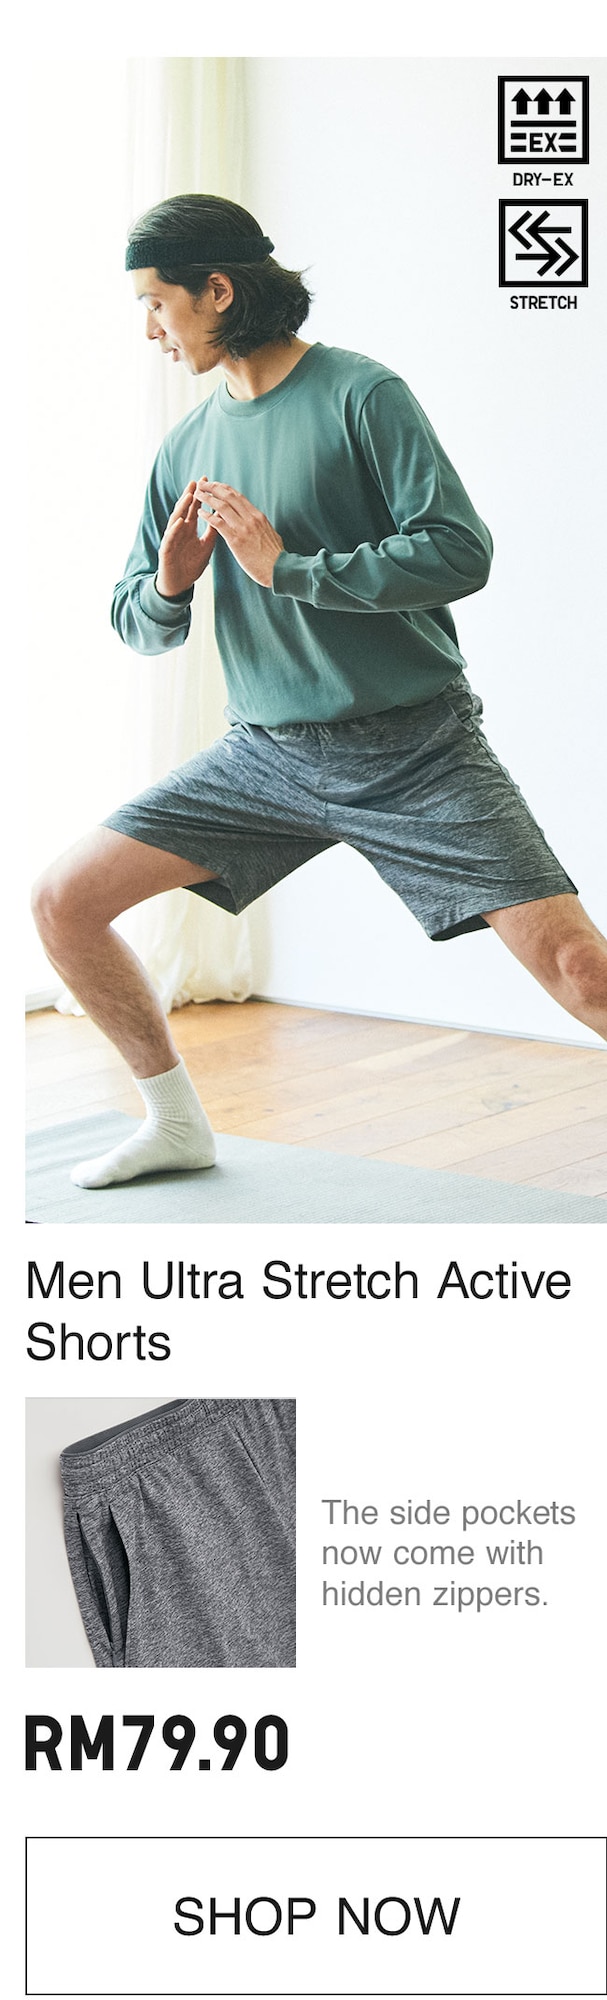 MEN ULTRA STRETCH ACTIVE SHORTS